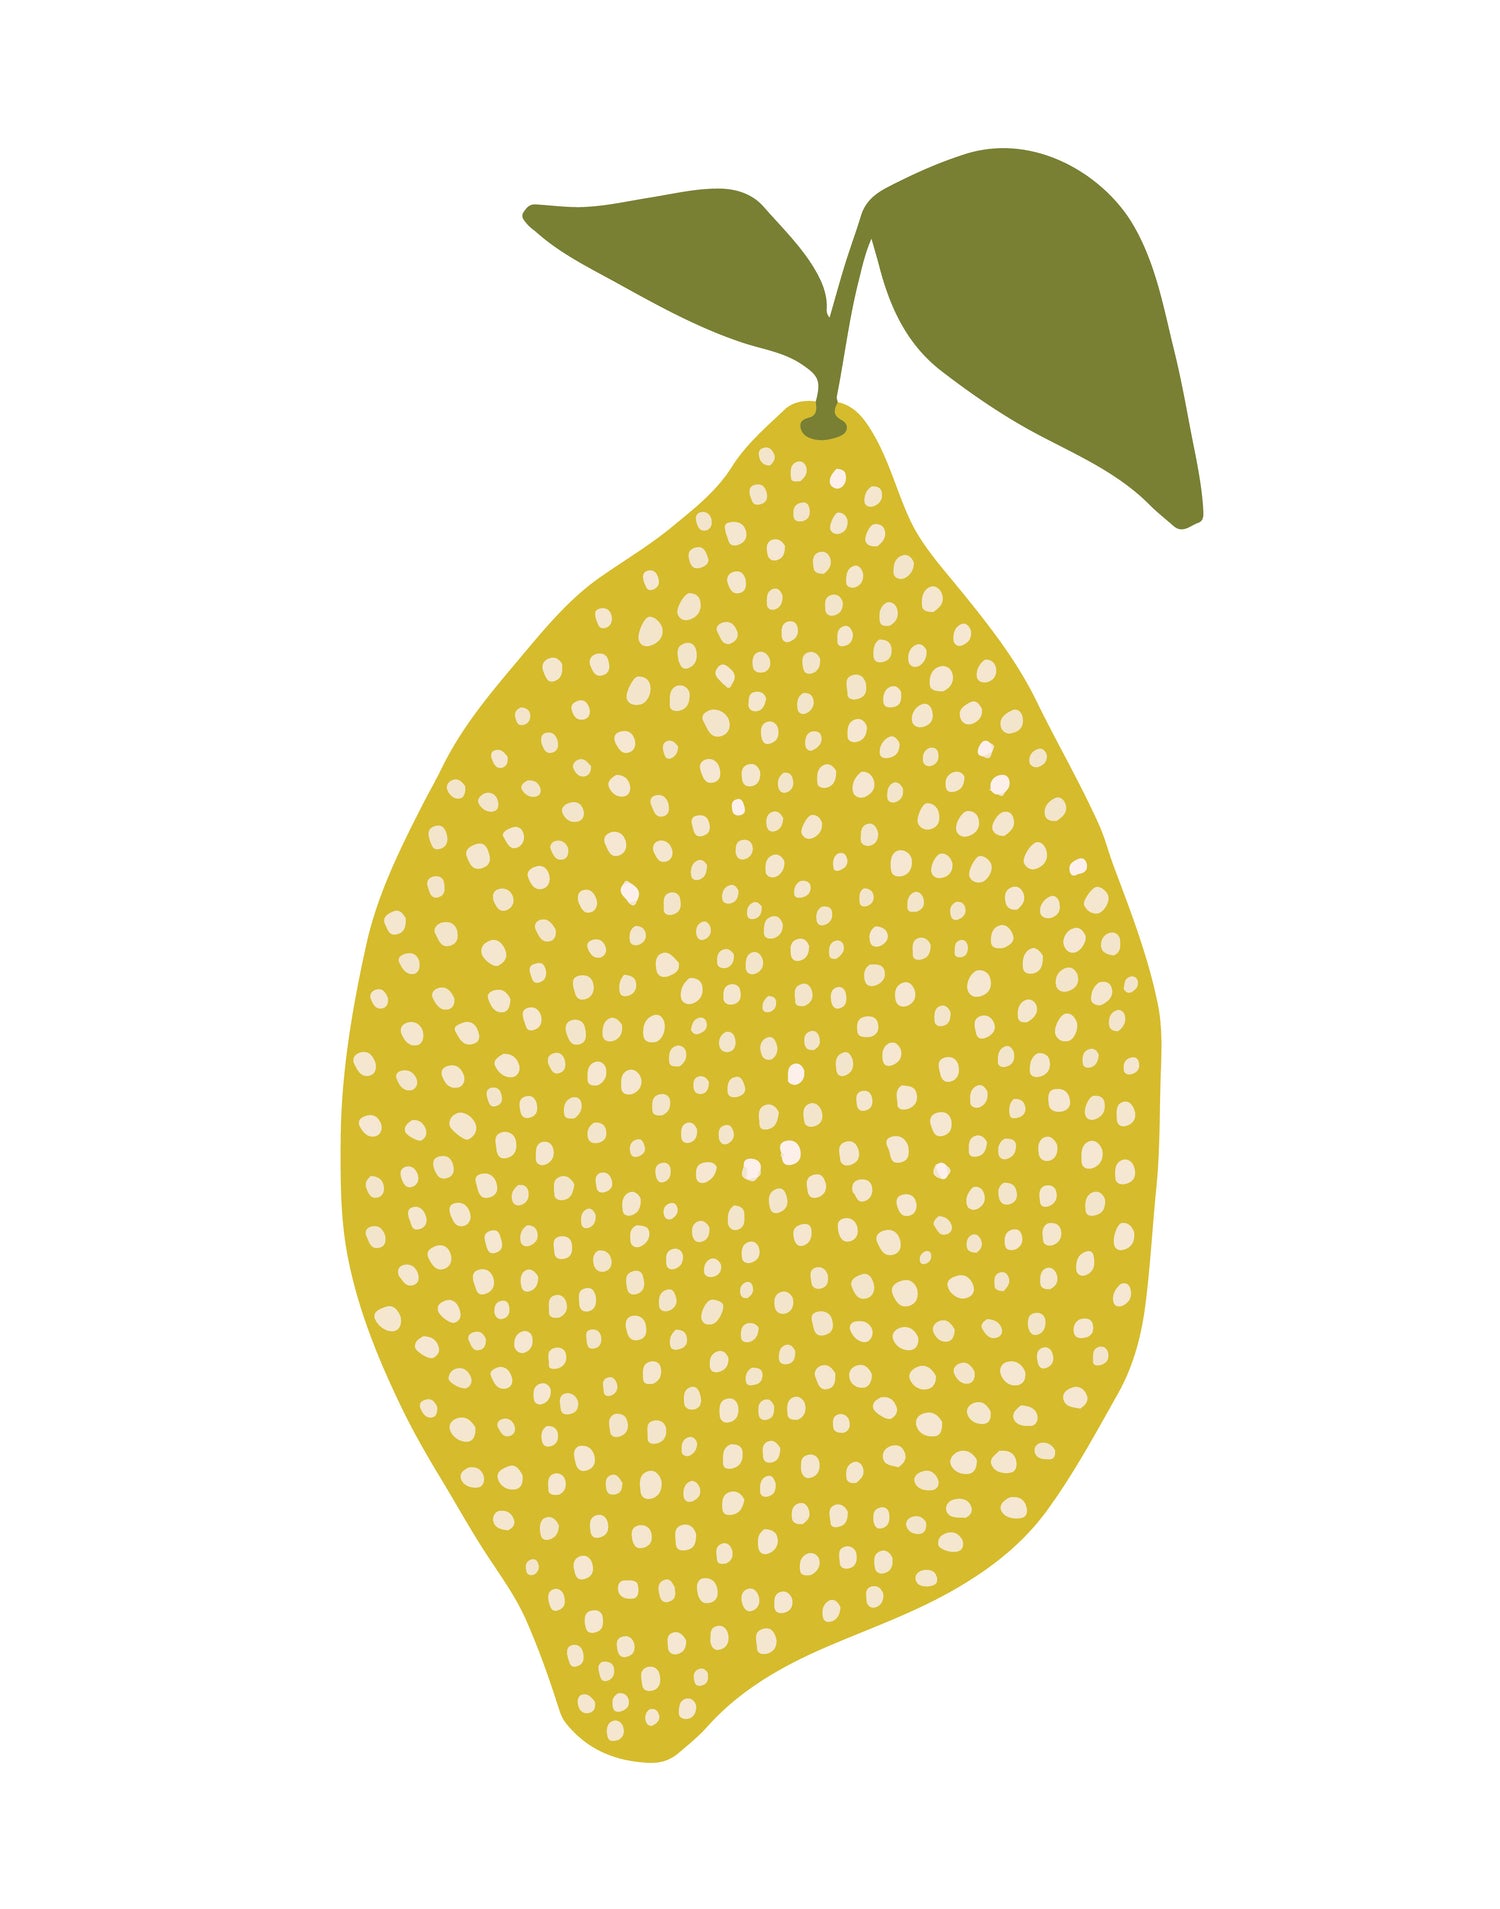 Lemon Illustration as a fine art print by Freckled Fuchsia